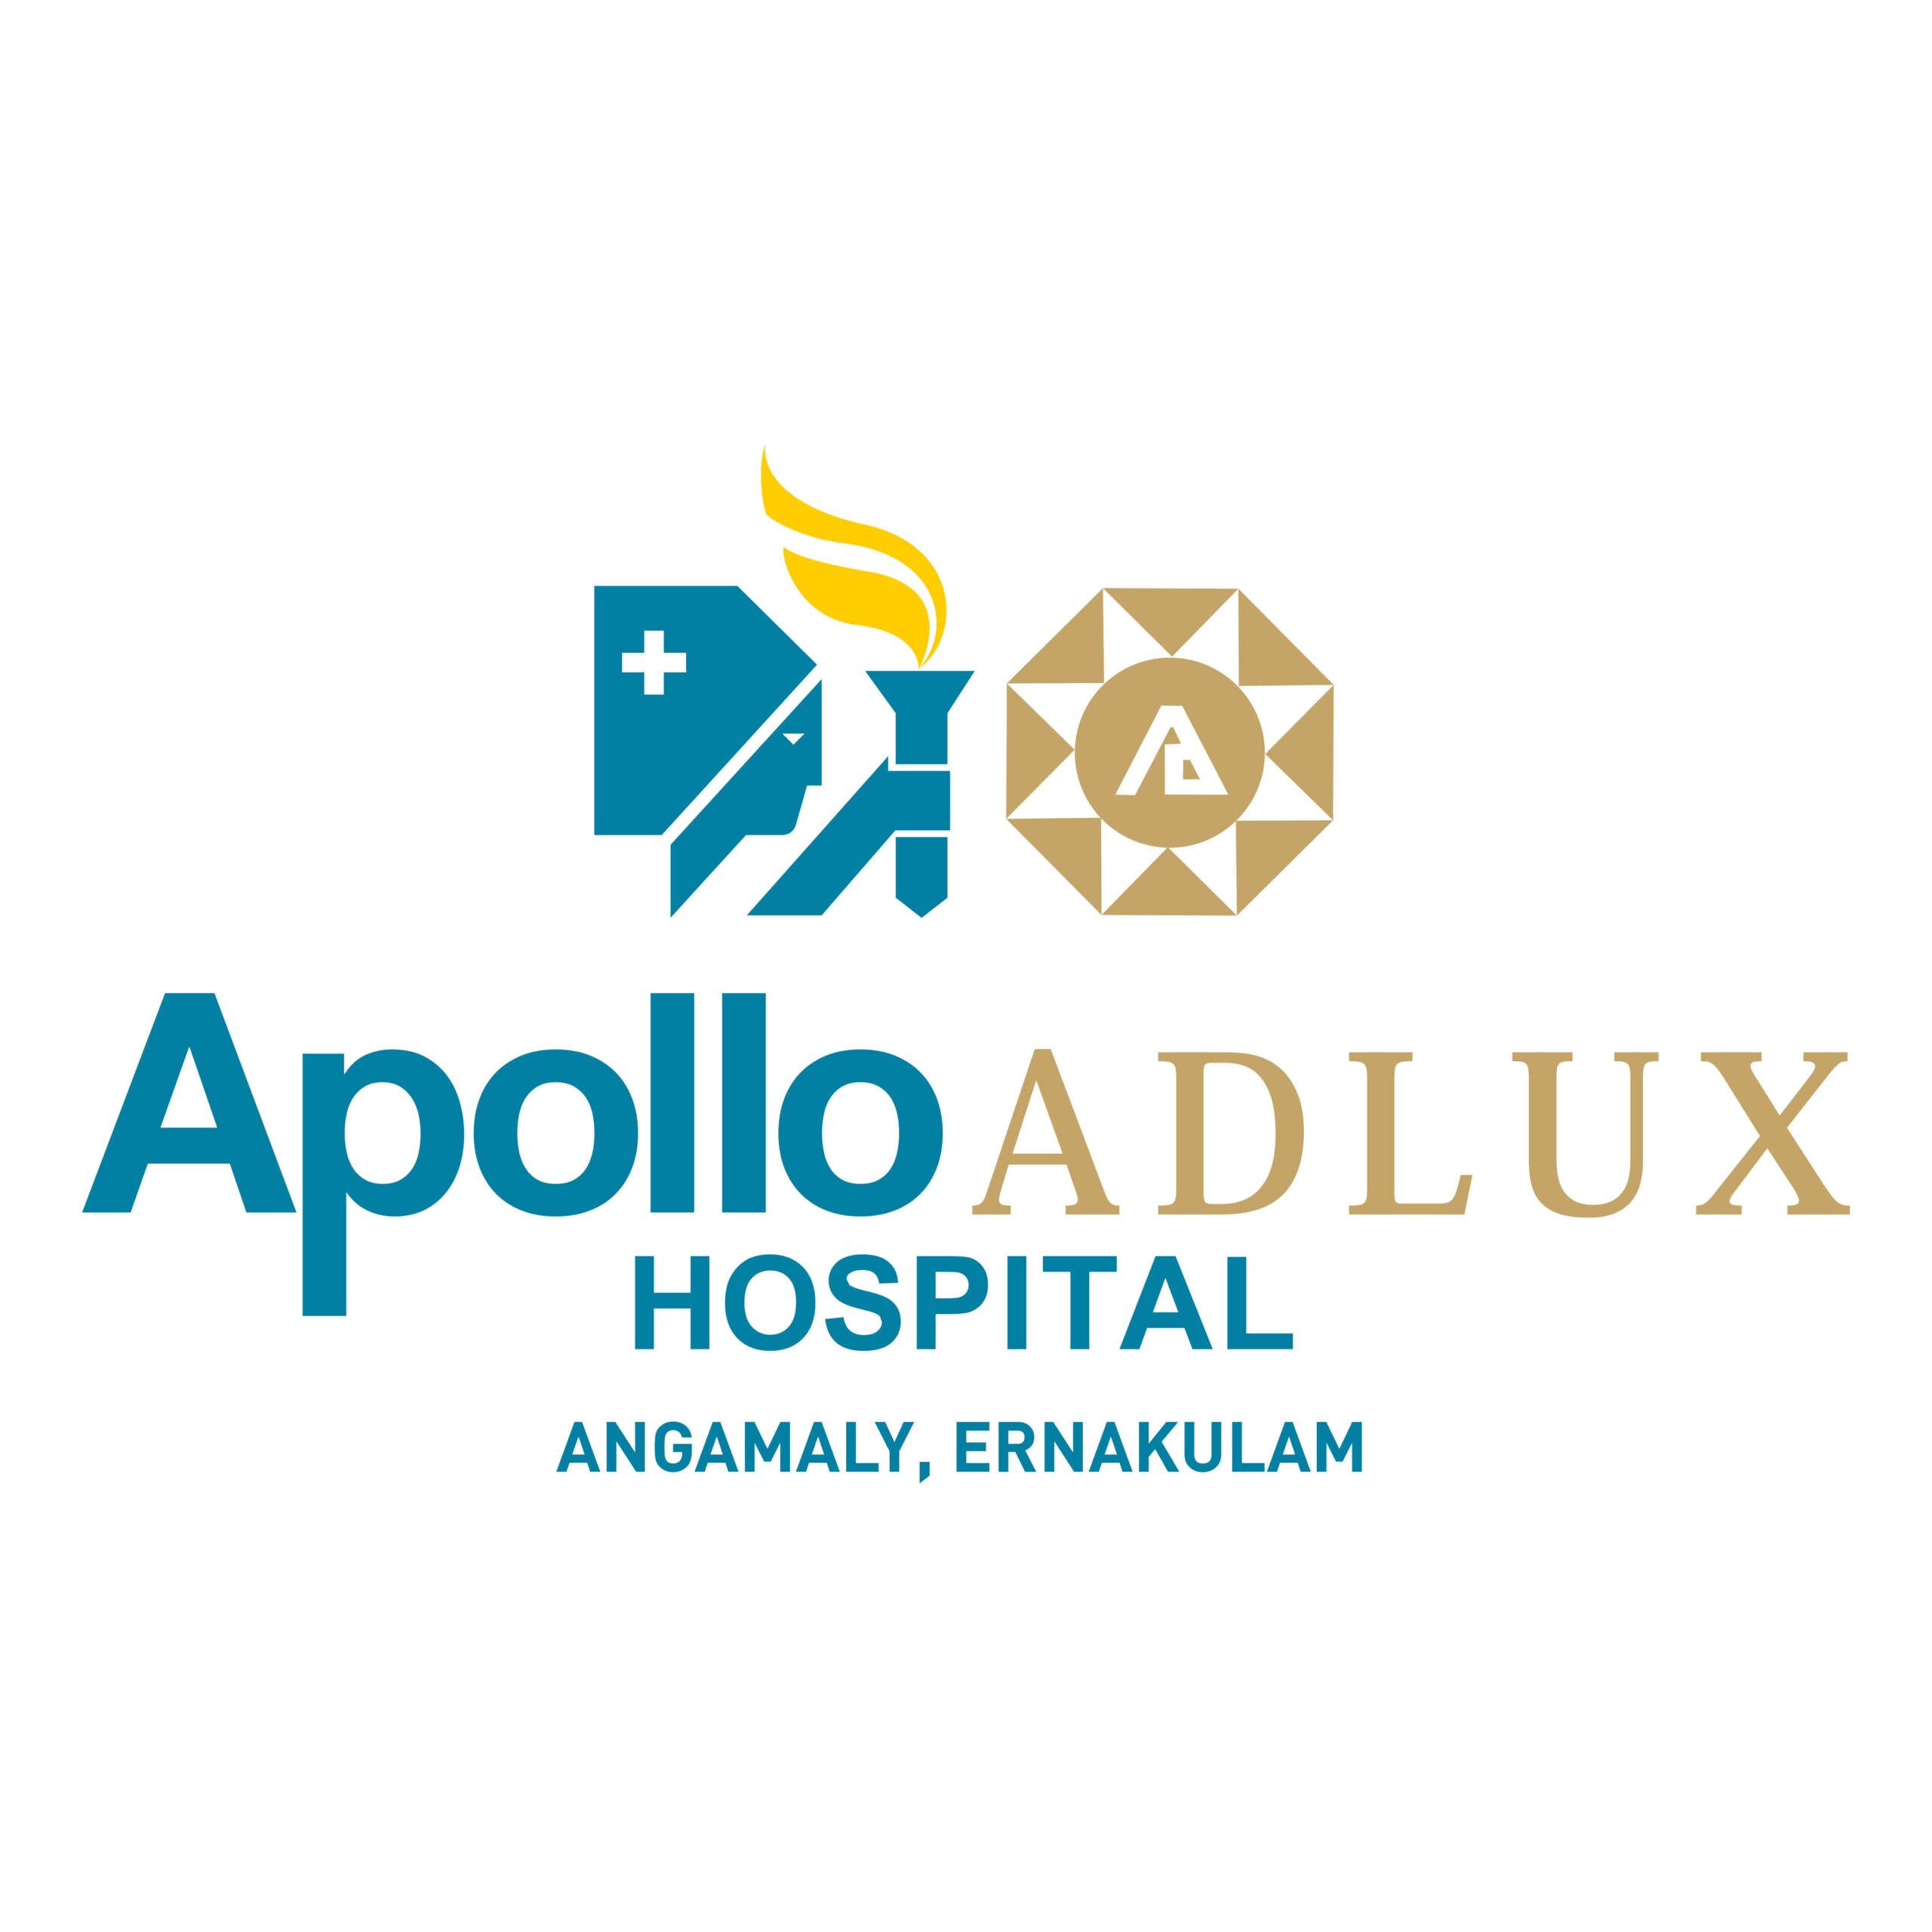 Apollo Adlux